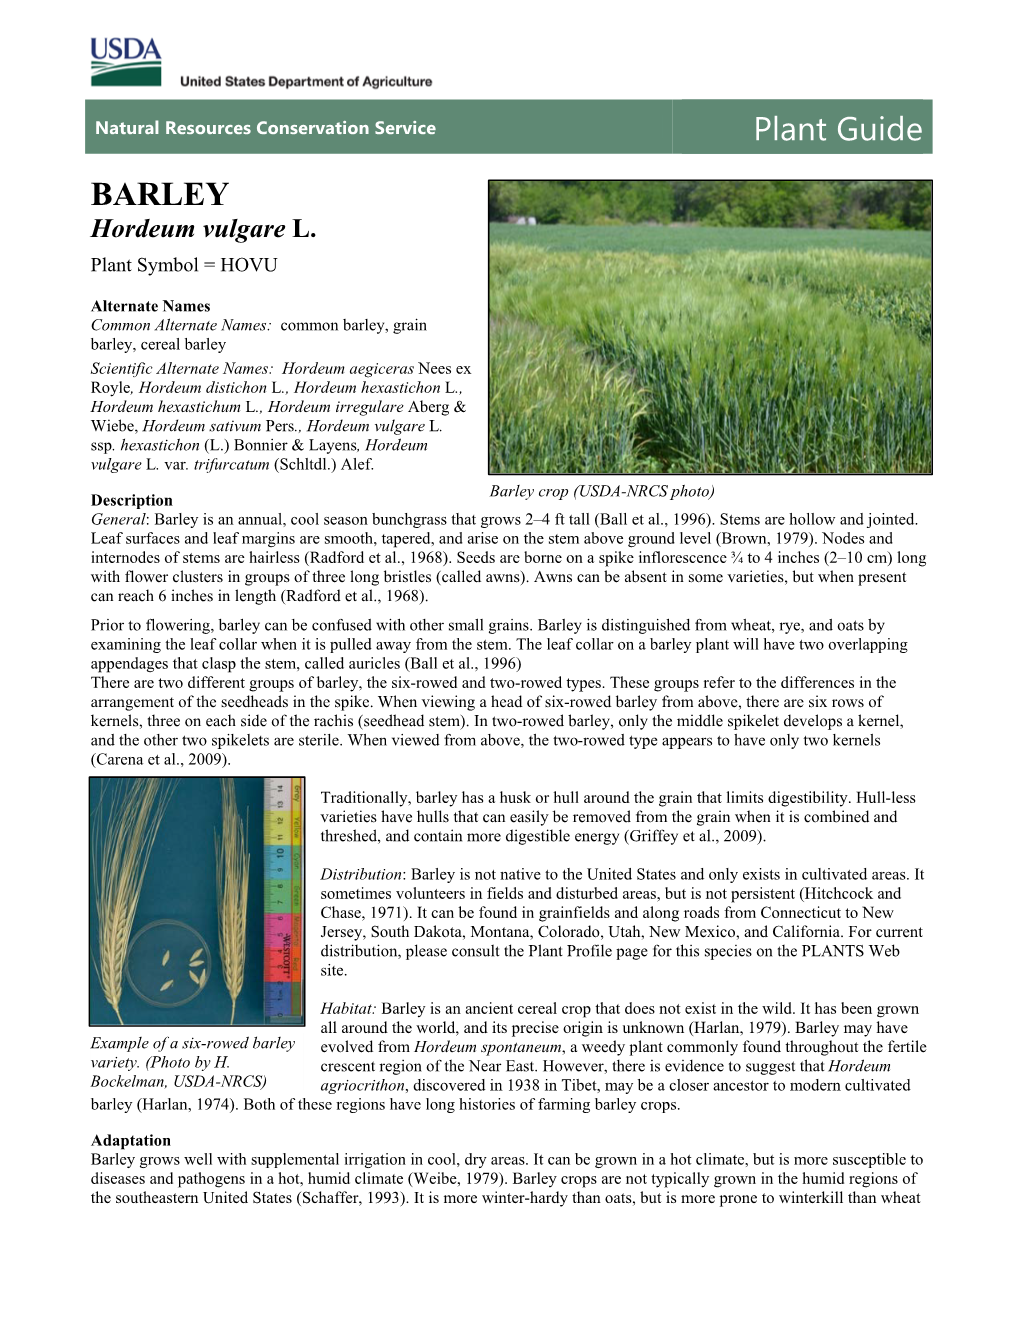 Barley Plant Guide